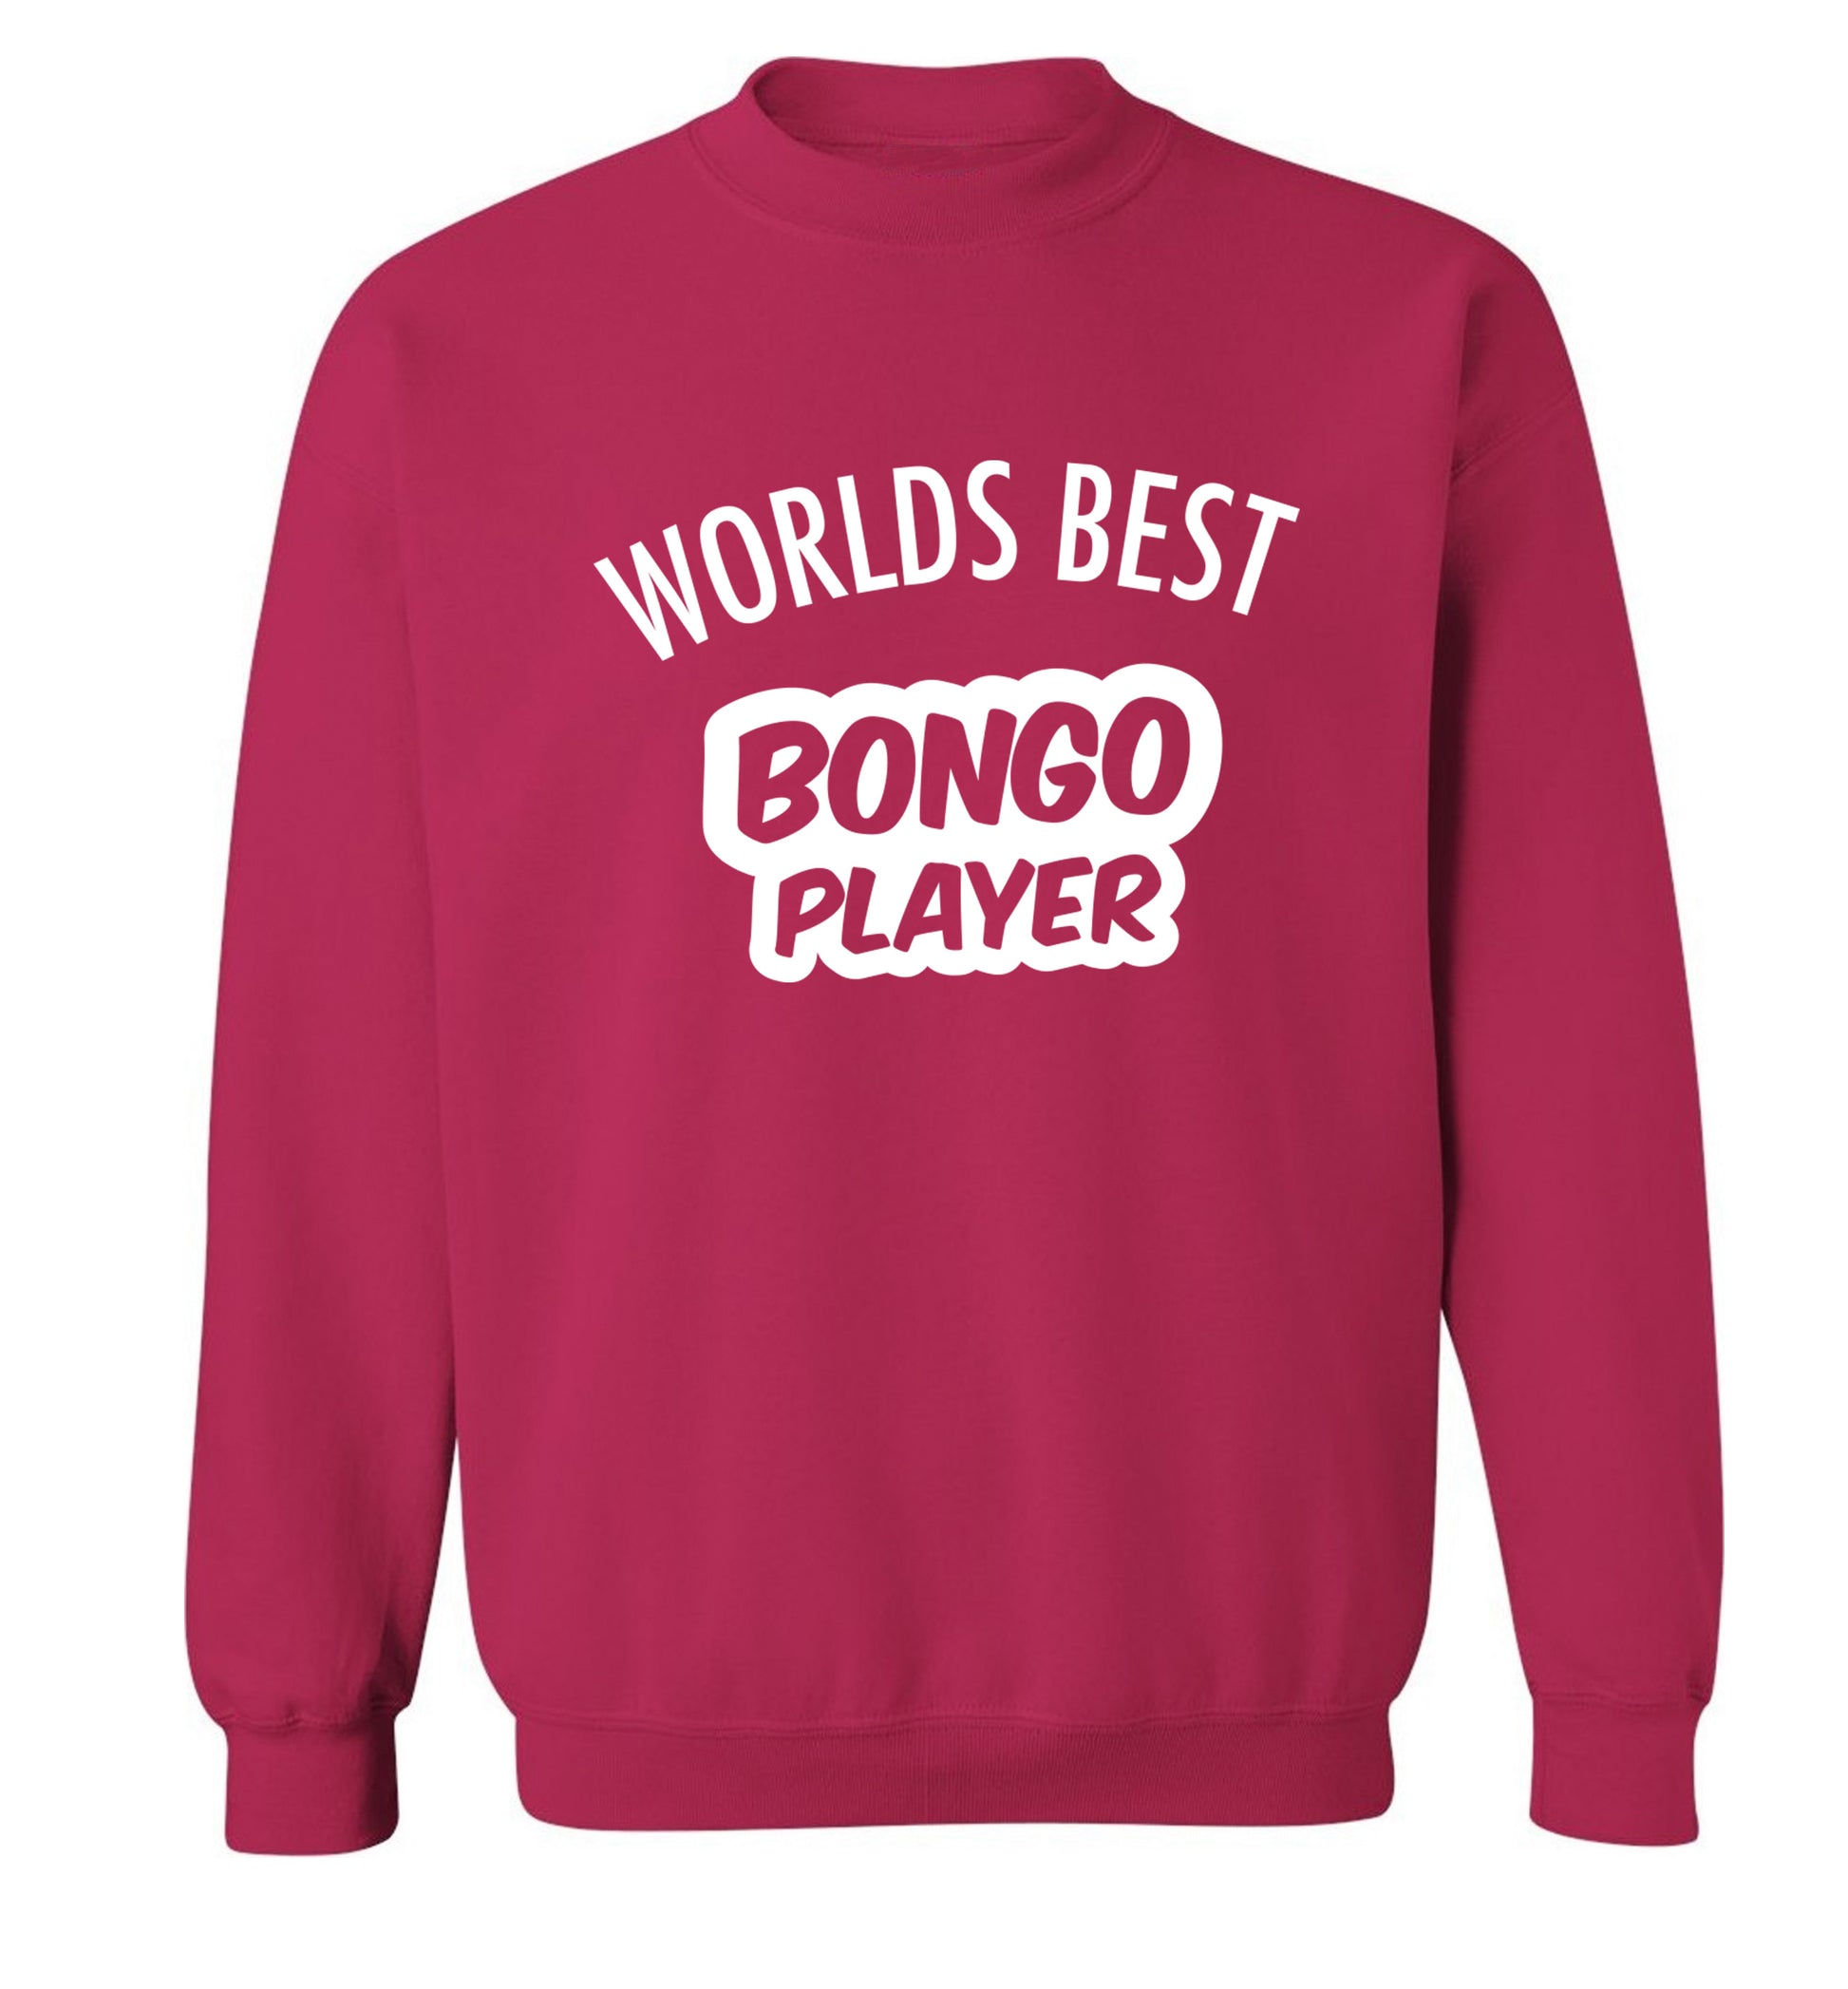 Worlds best bongo player Adult's unisex pink Sweater 2XL